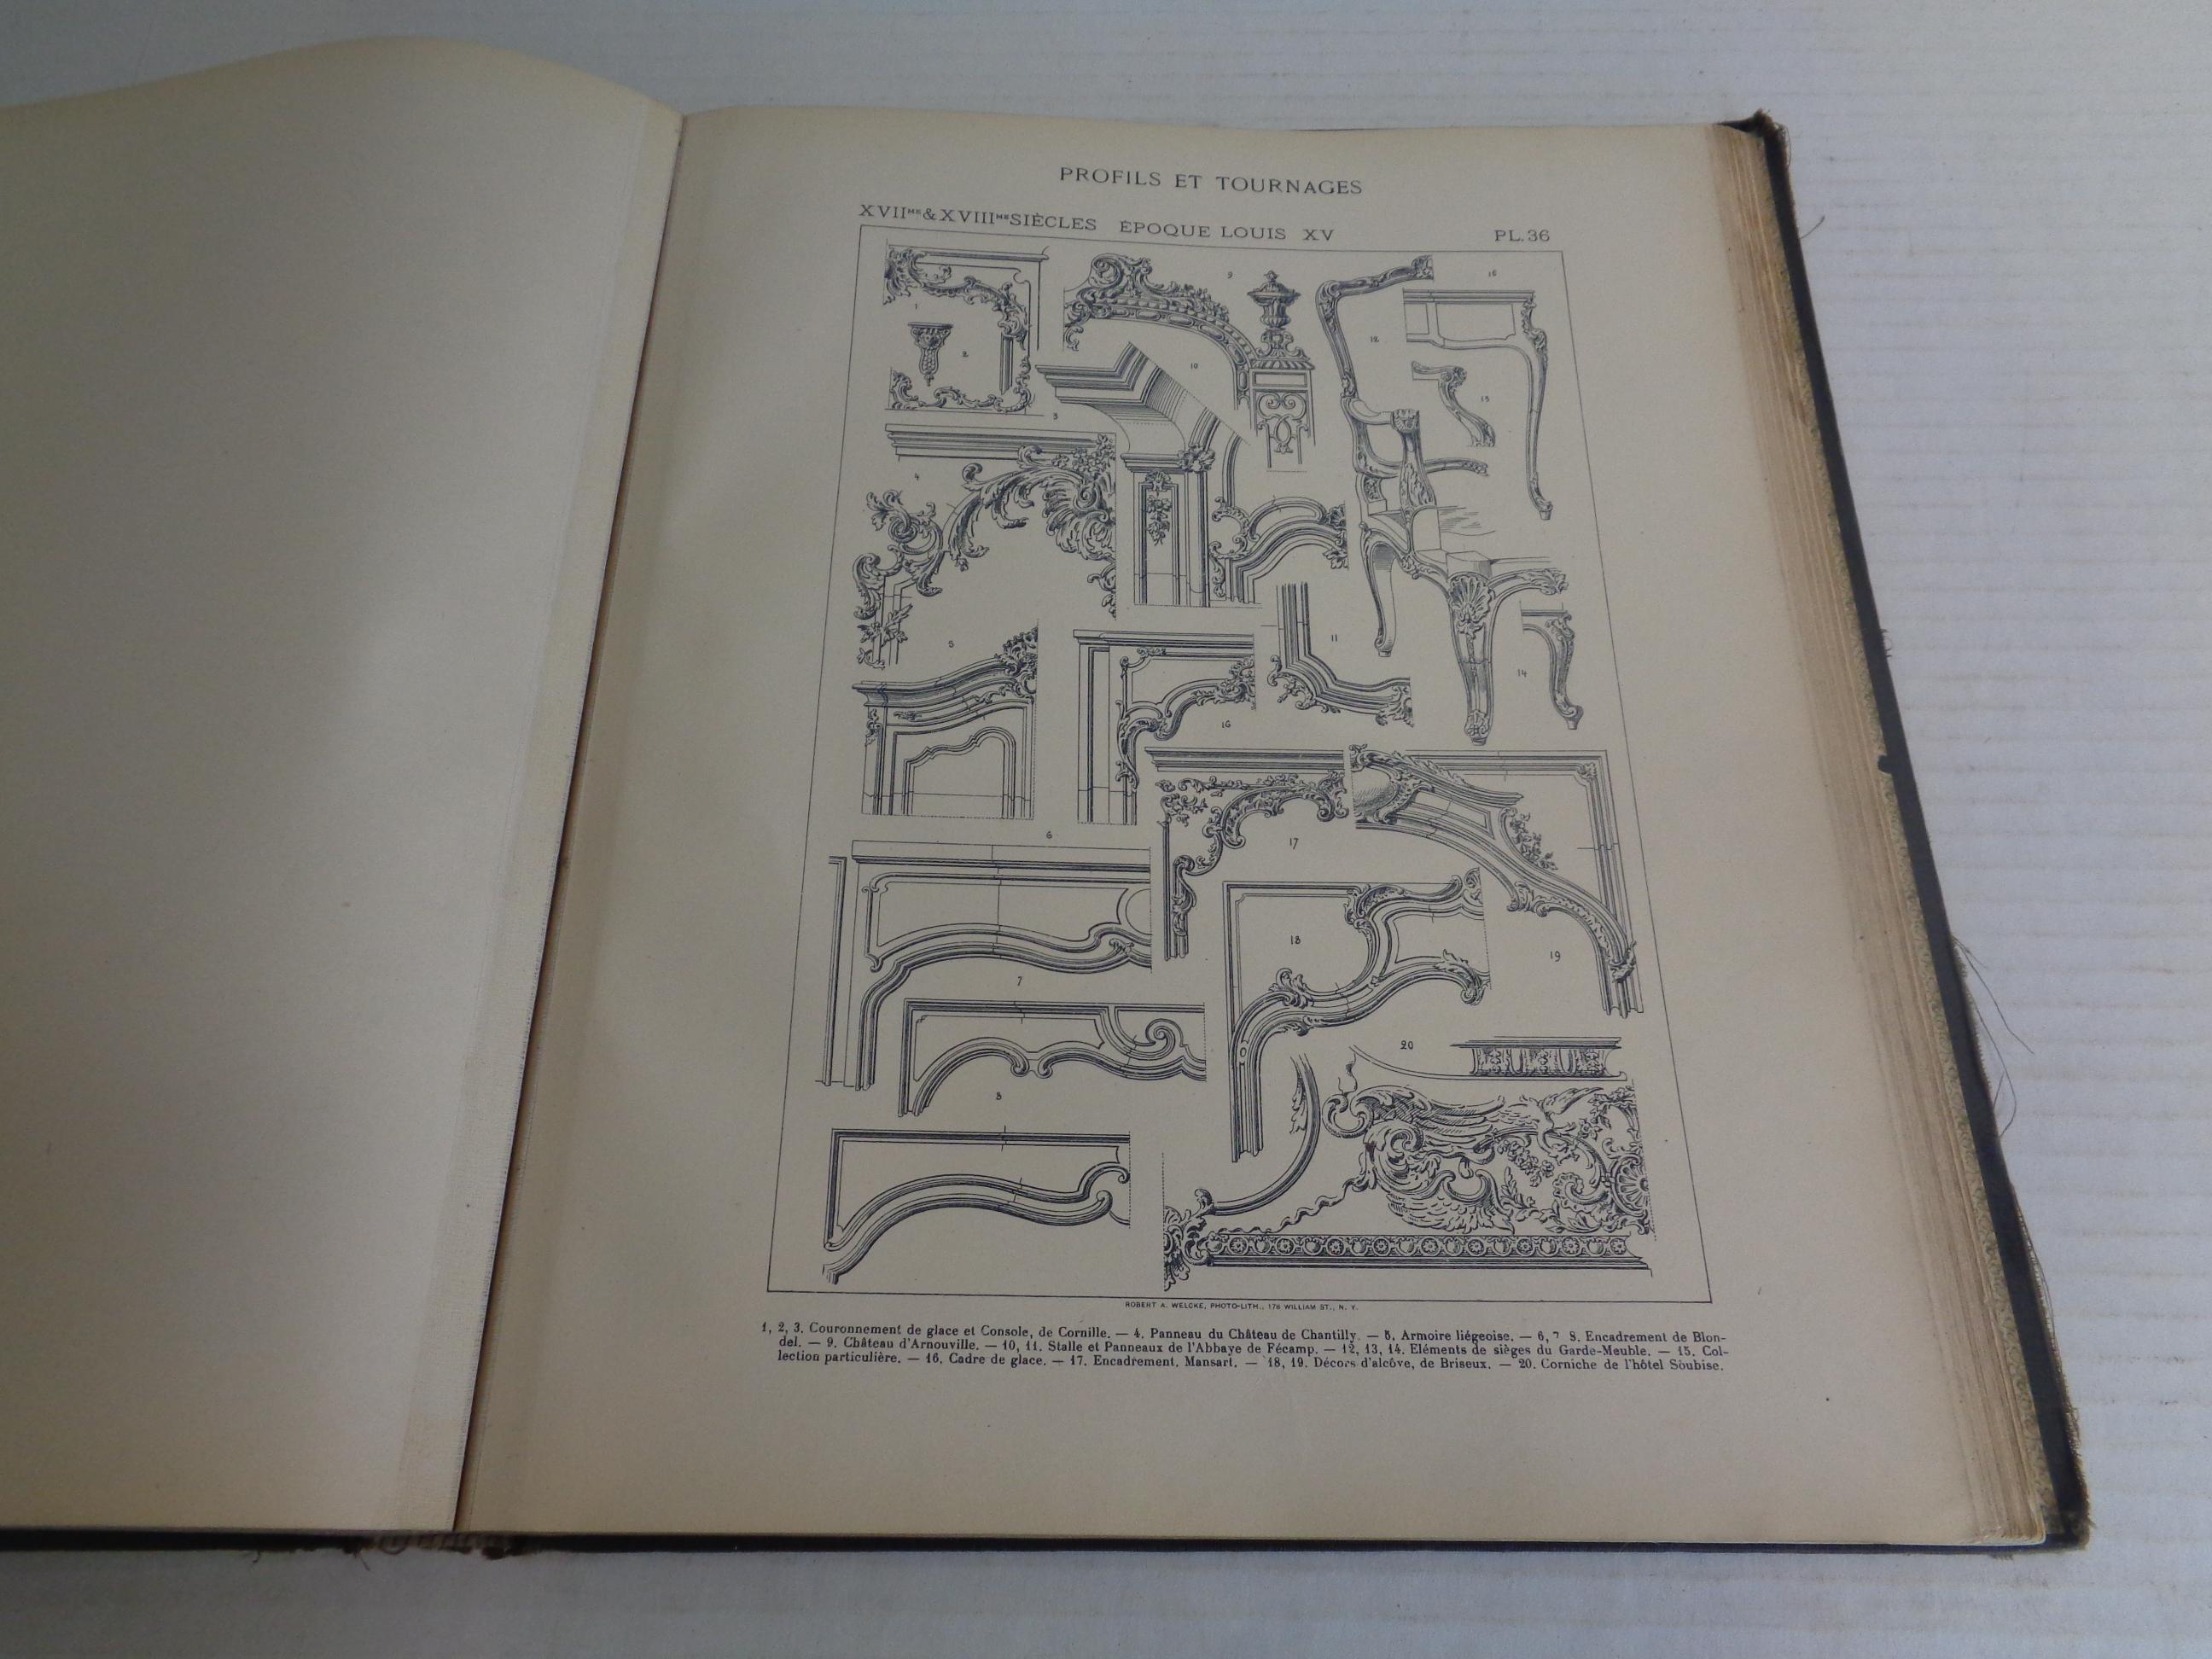  FRENCH STYLES: Furniture & Architecture - Bajot, Paris - 19th C. Folio Book For Sale 5